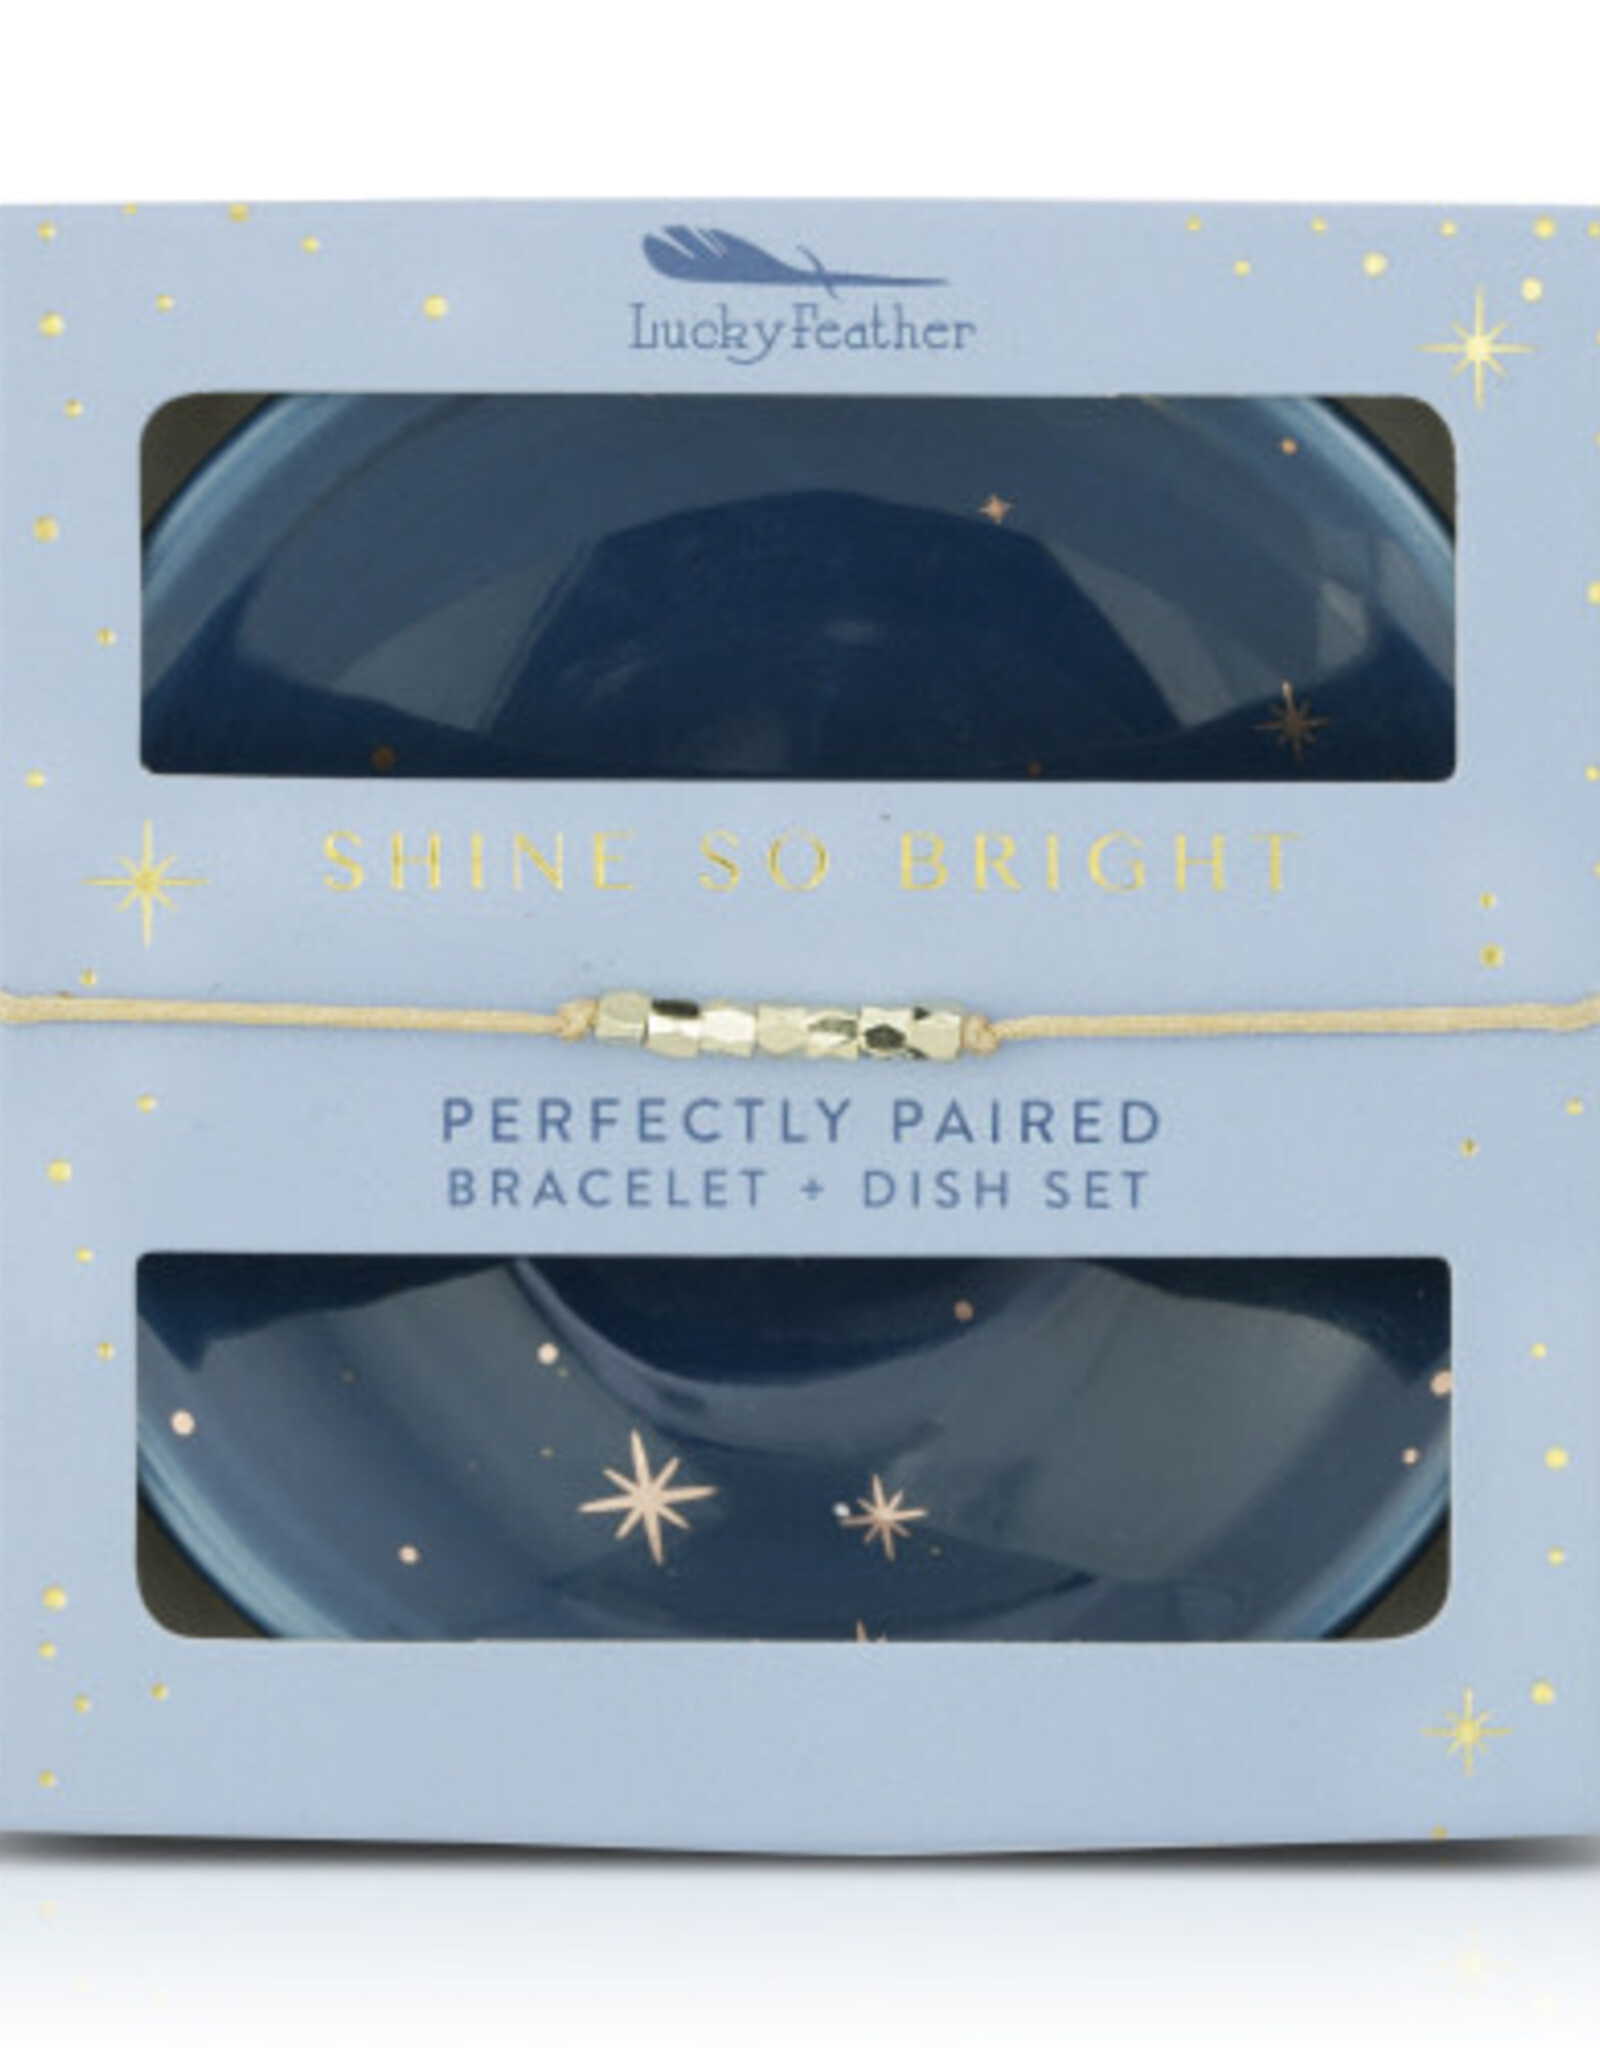 Lucky Feather Bracelet/Dish Set